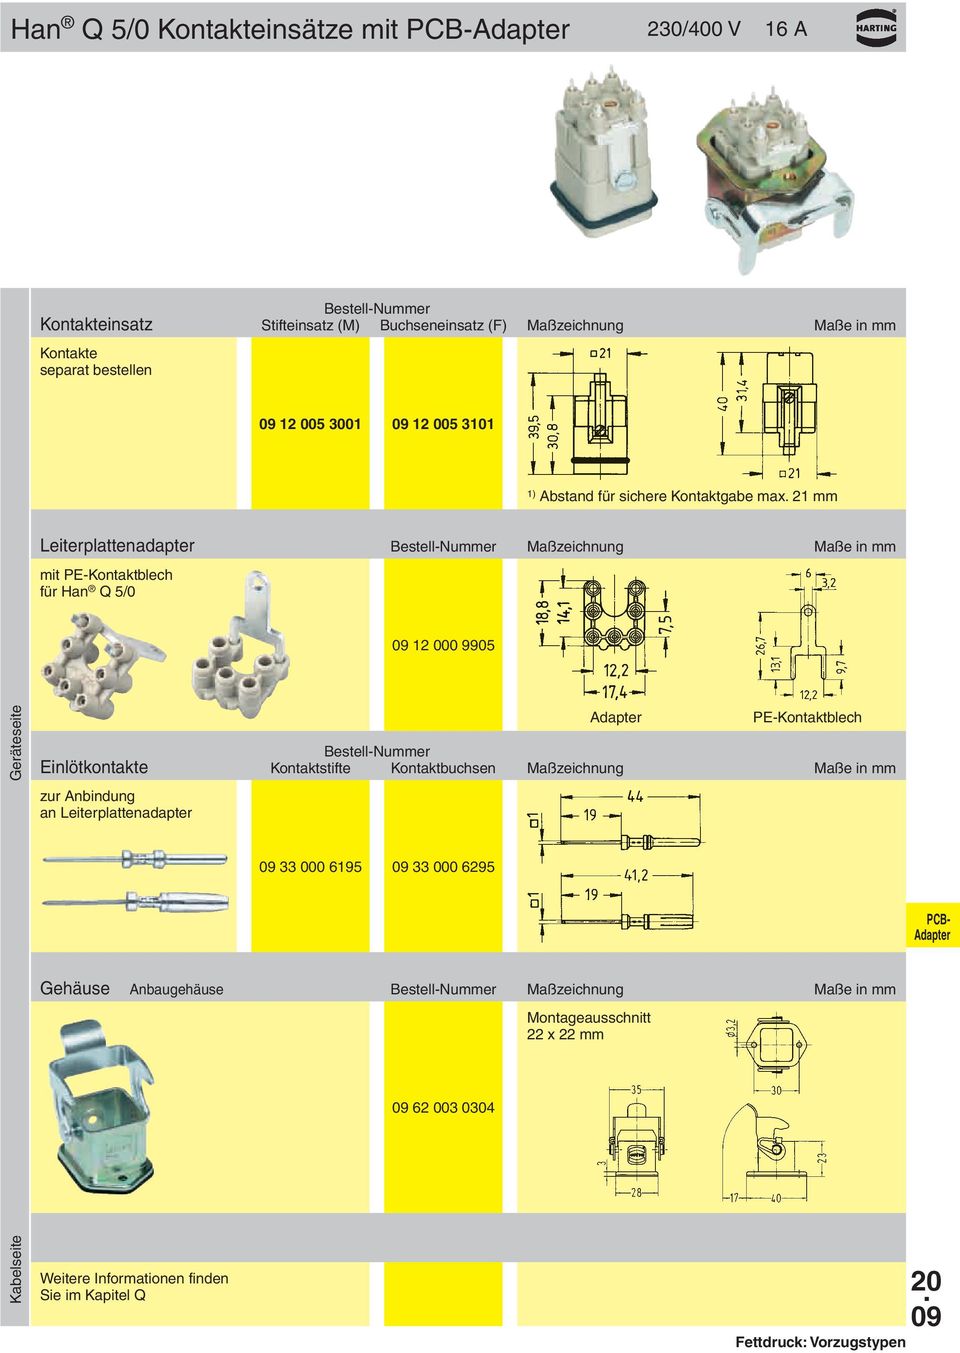 21 mm Leiterplattenadapter Maßzeichnung Maße in mm mit PE-Kontaktblech für Han Q 5/0 09 12 000 9905 Geräteseite zur Anbindung an Leiterplattenadapter